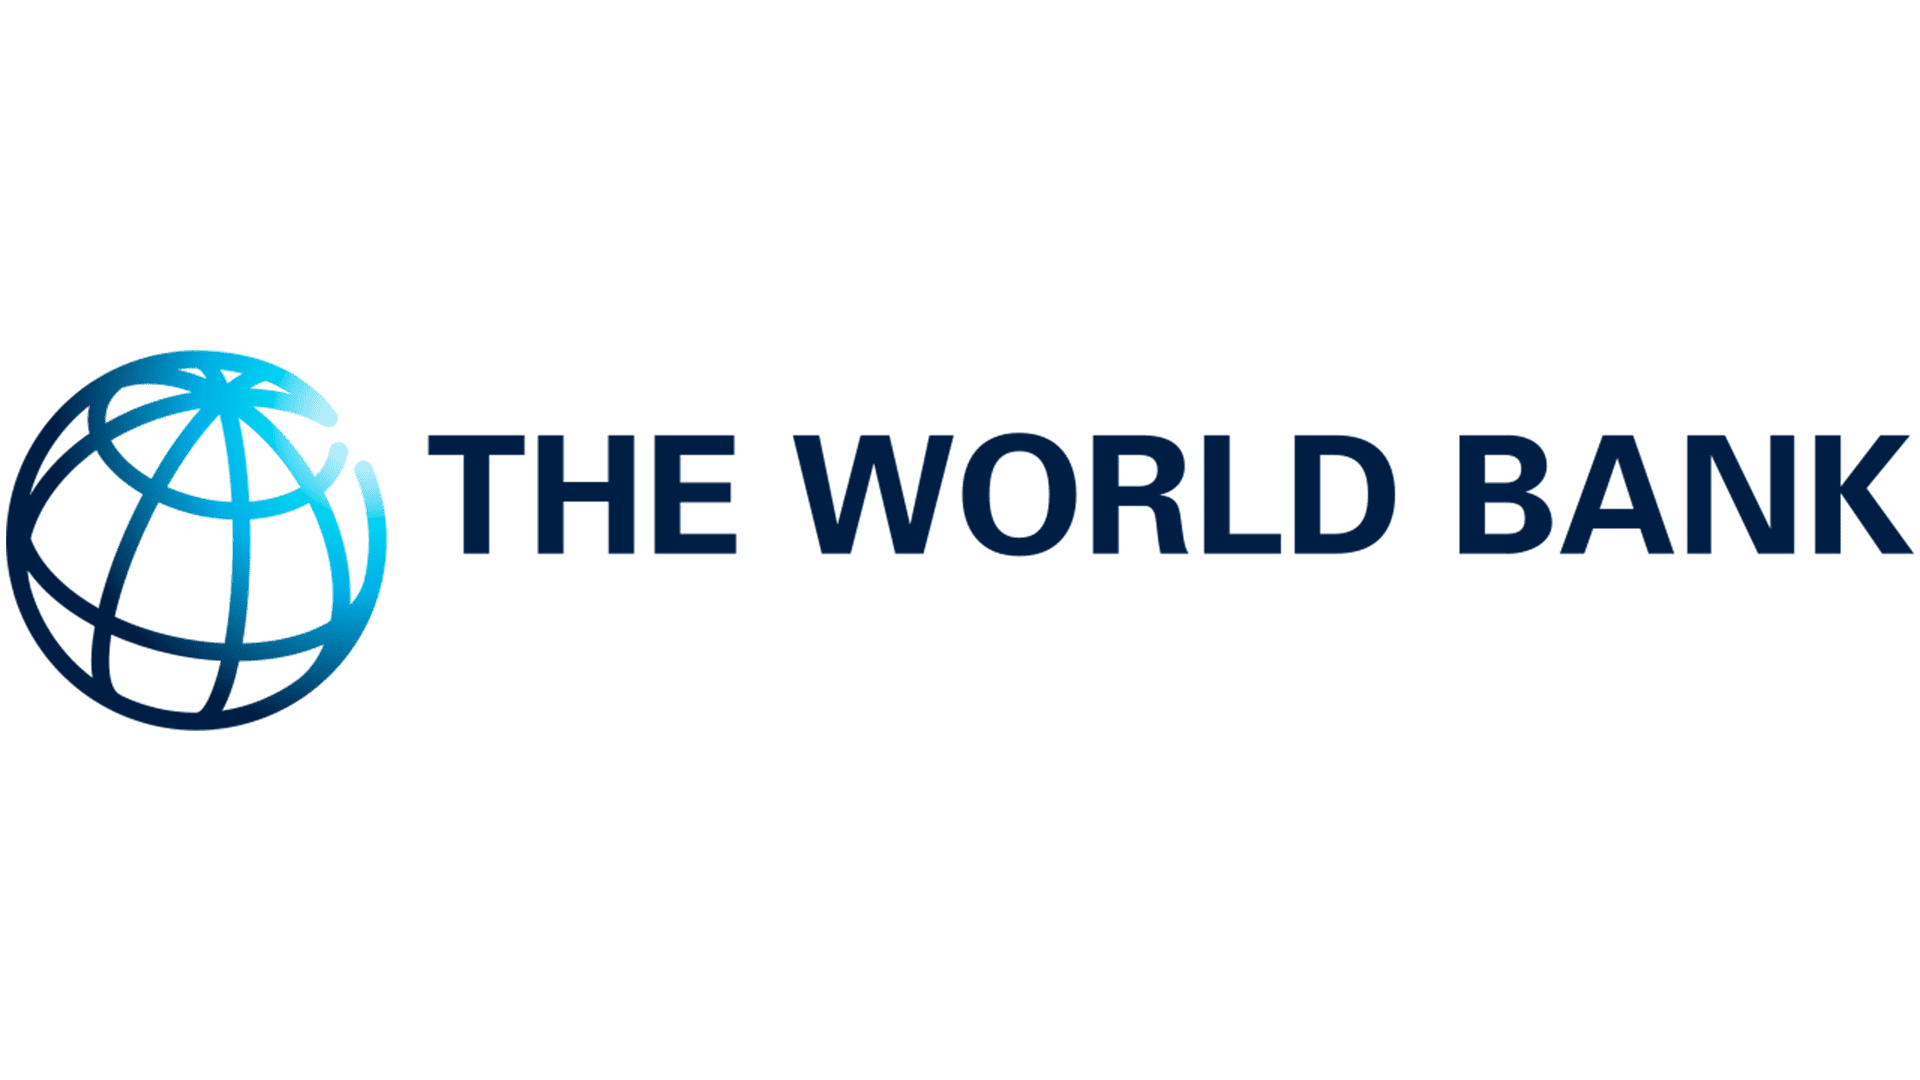 The World Bank's logo